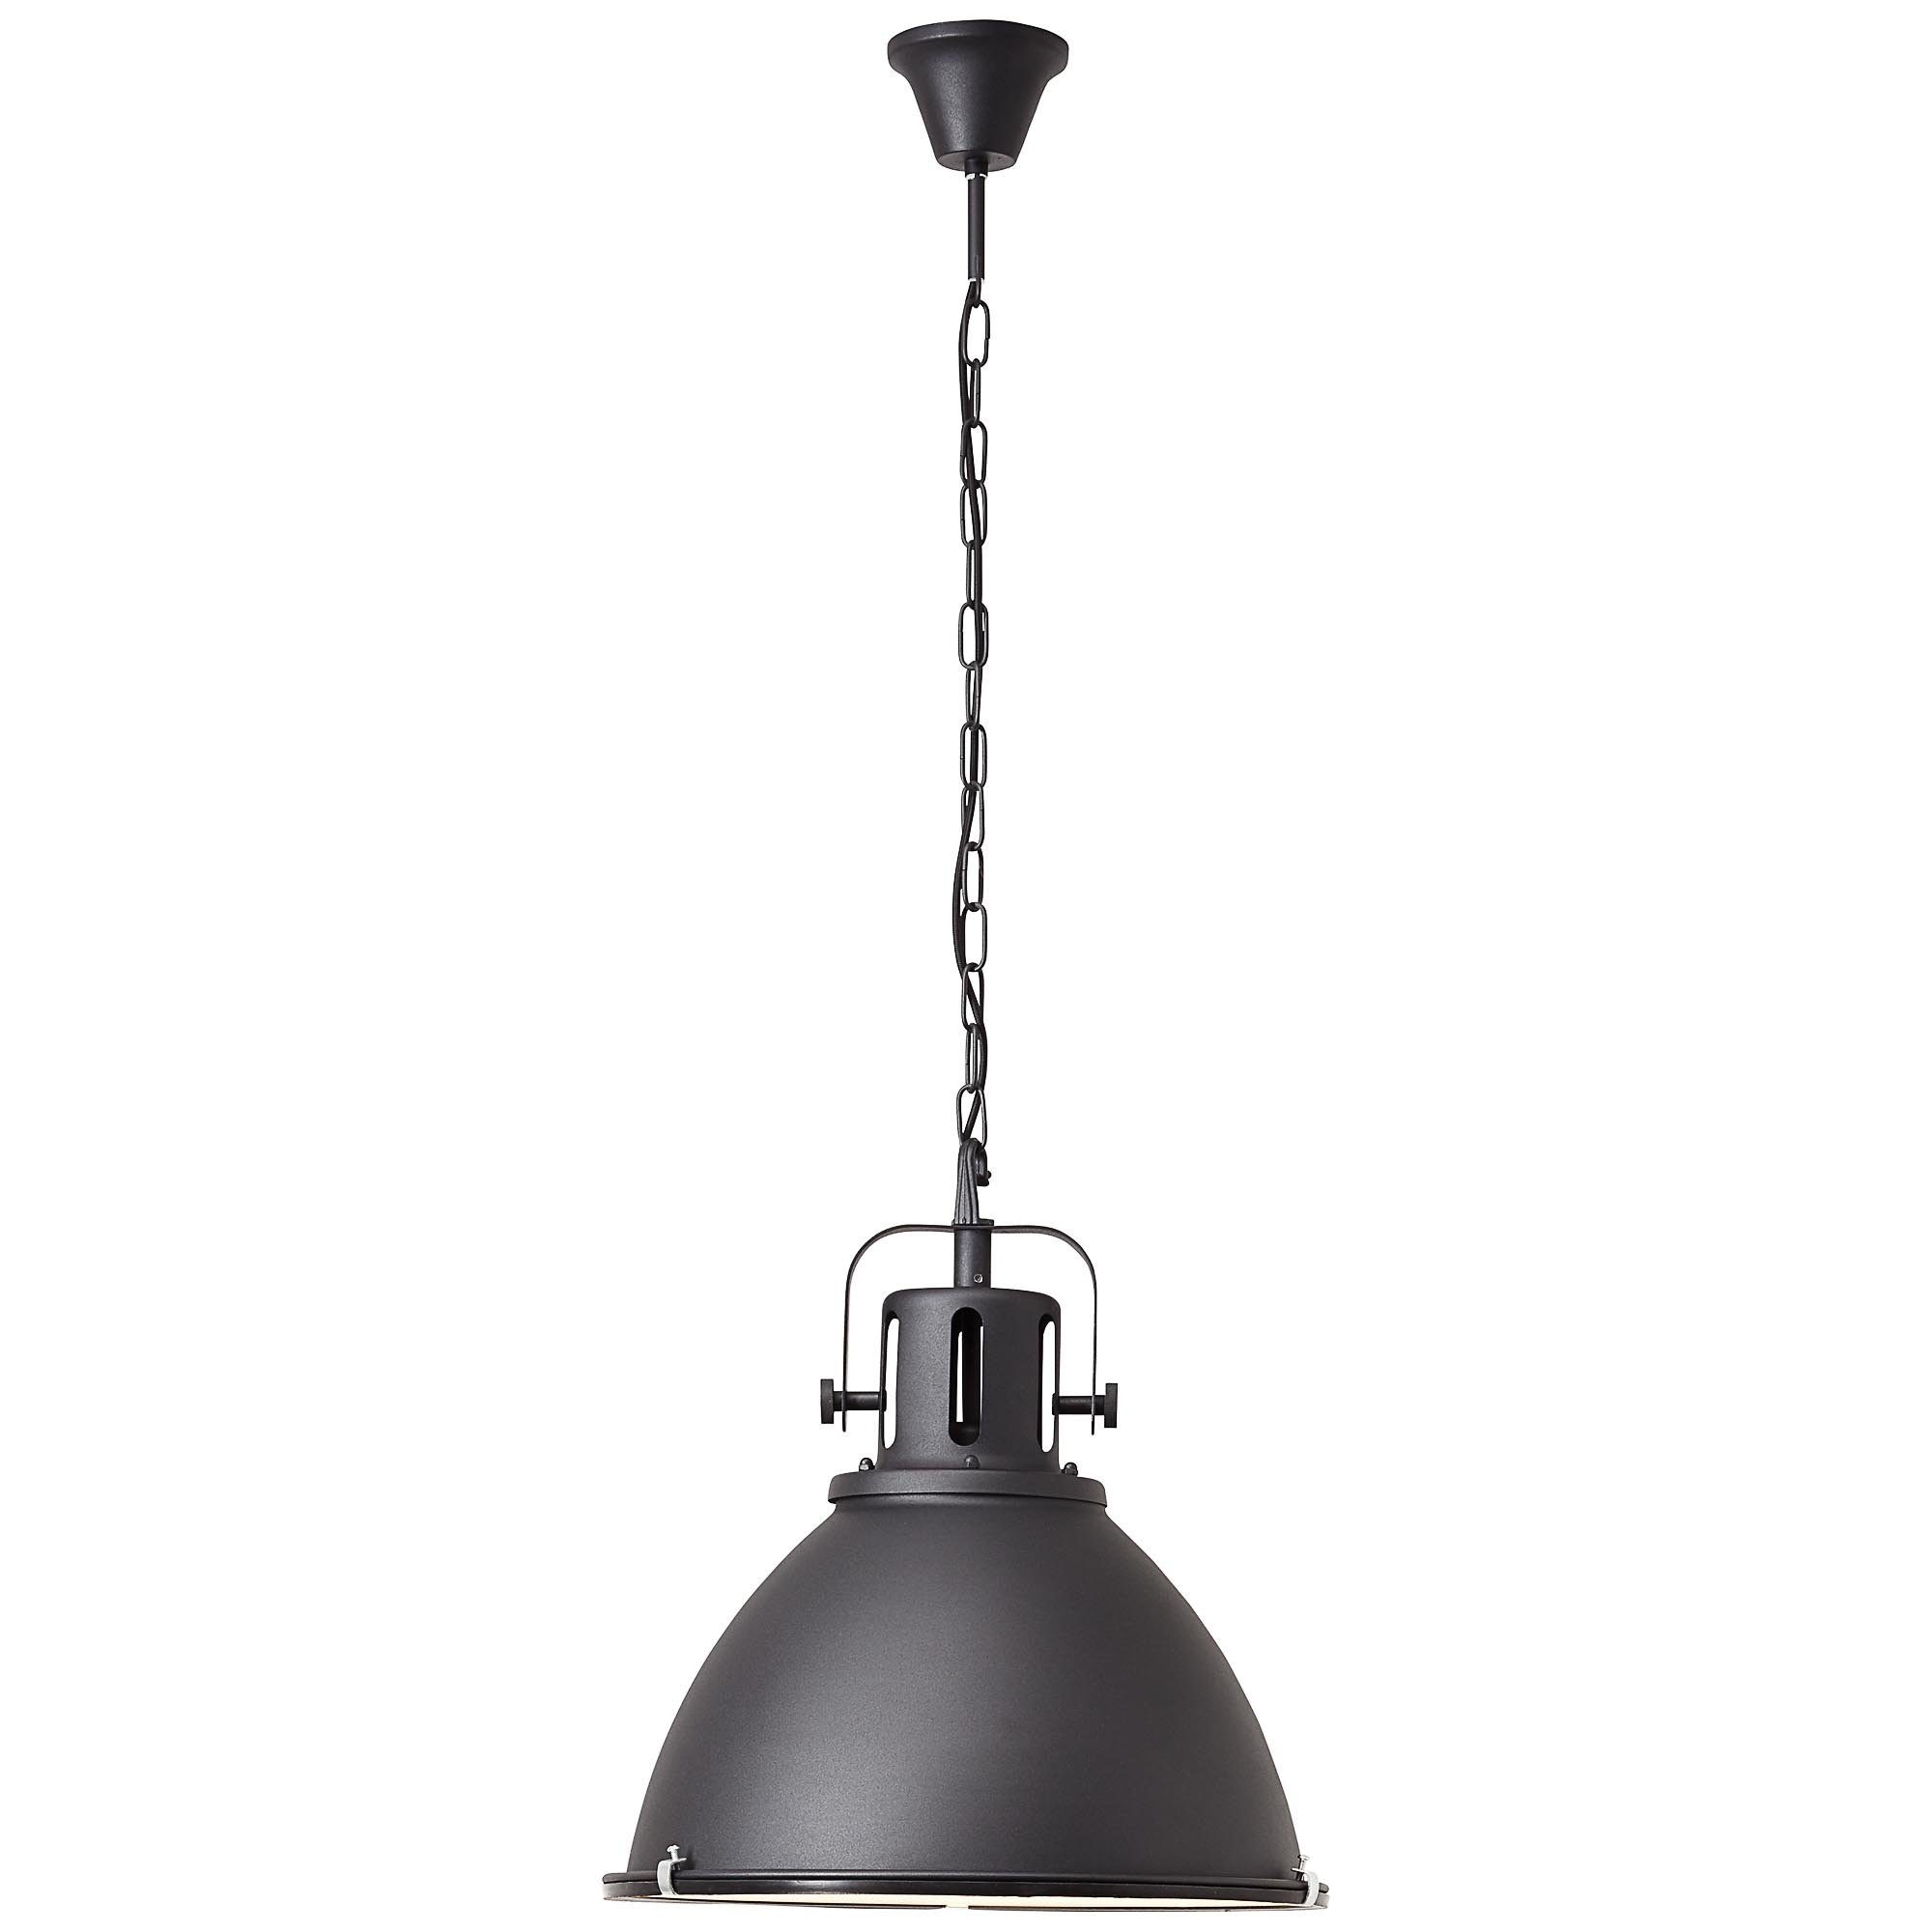 Brilliant Pendelleuchte Jesper, Lampe Jesper Glas 1x schwarz geeig E27, Pendelleuchte 47cm A60, 60W